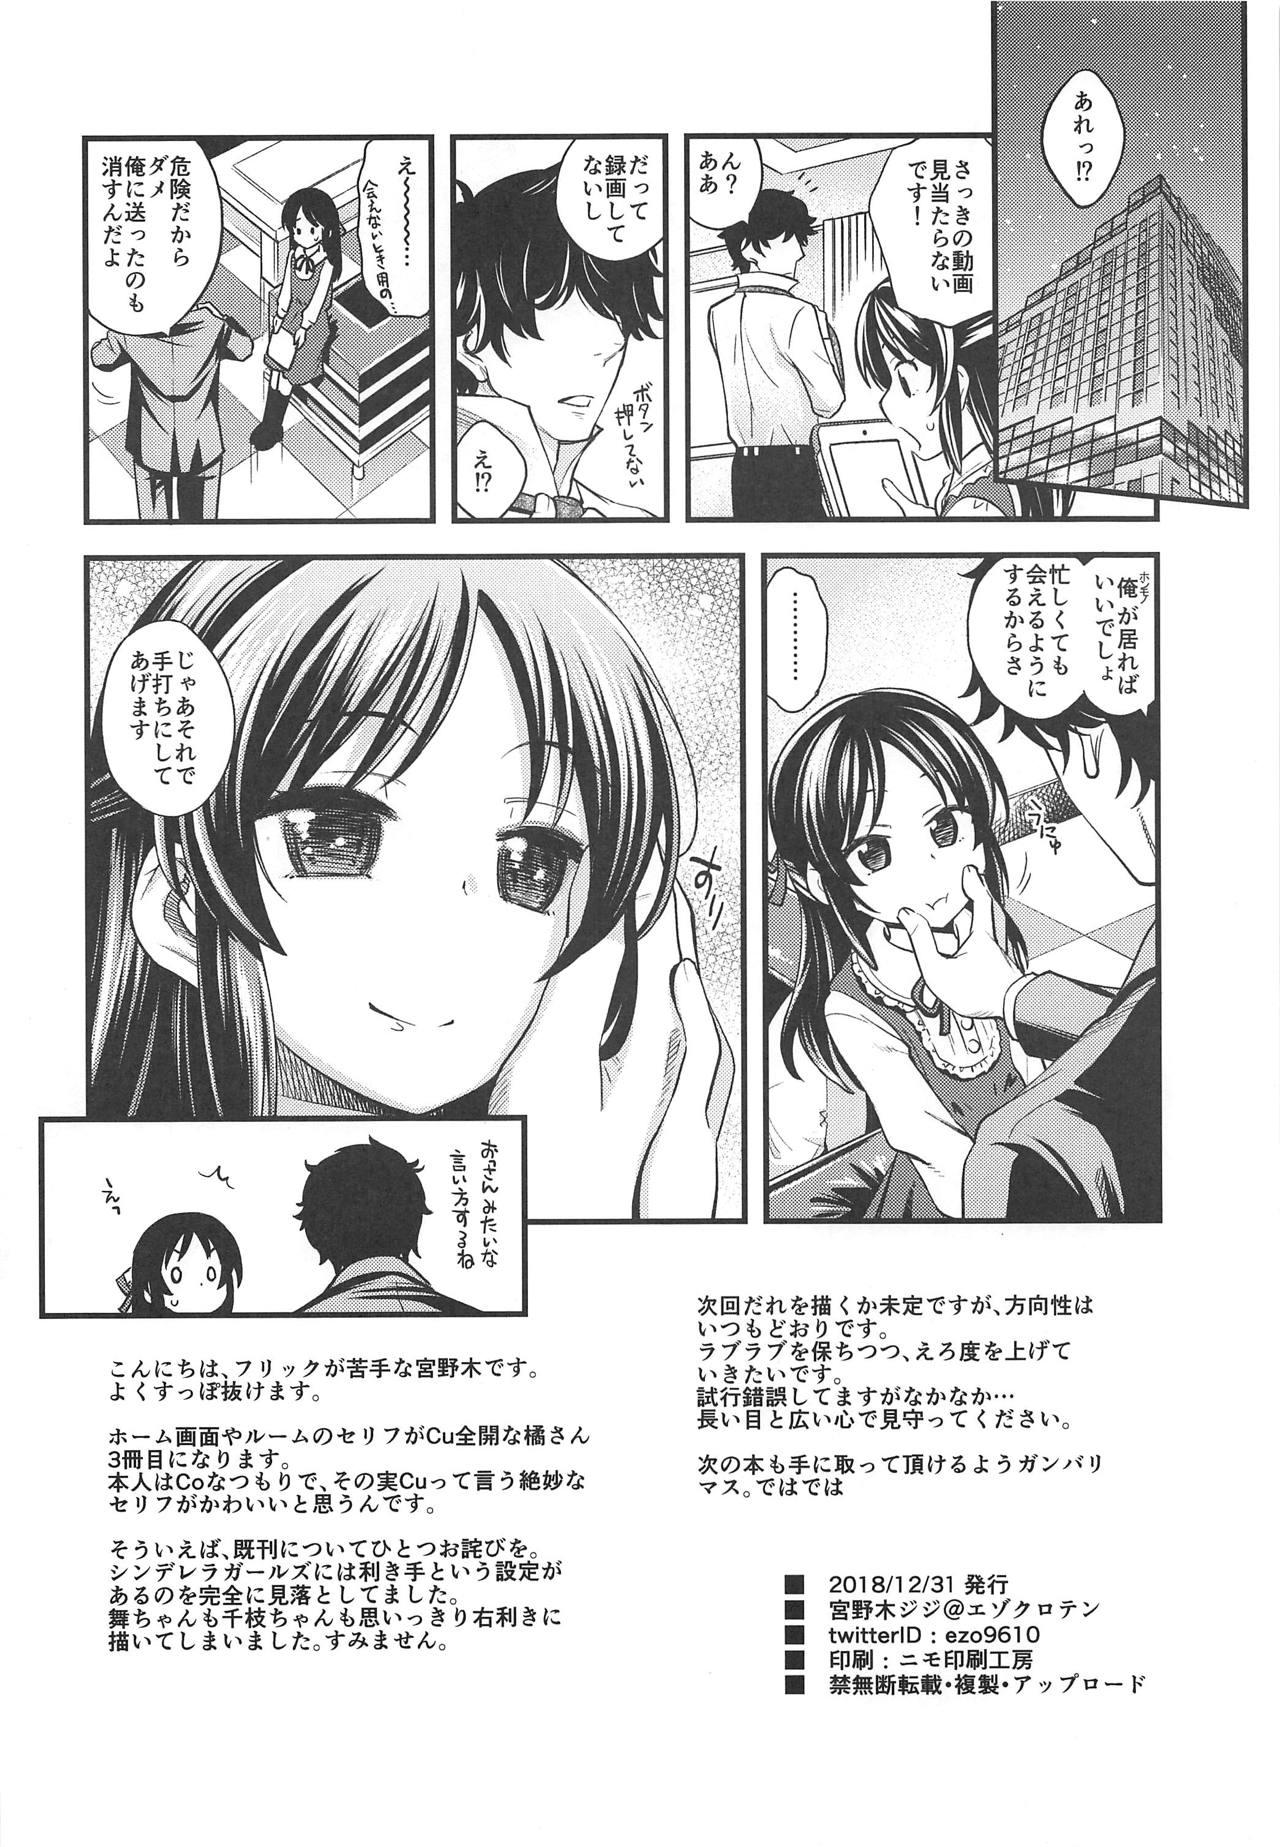 Asses Warui Ko Arisu 3 - The idolmaster Solo Girl - Page 25